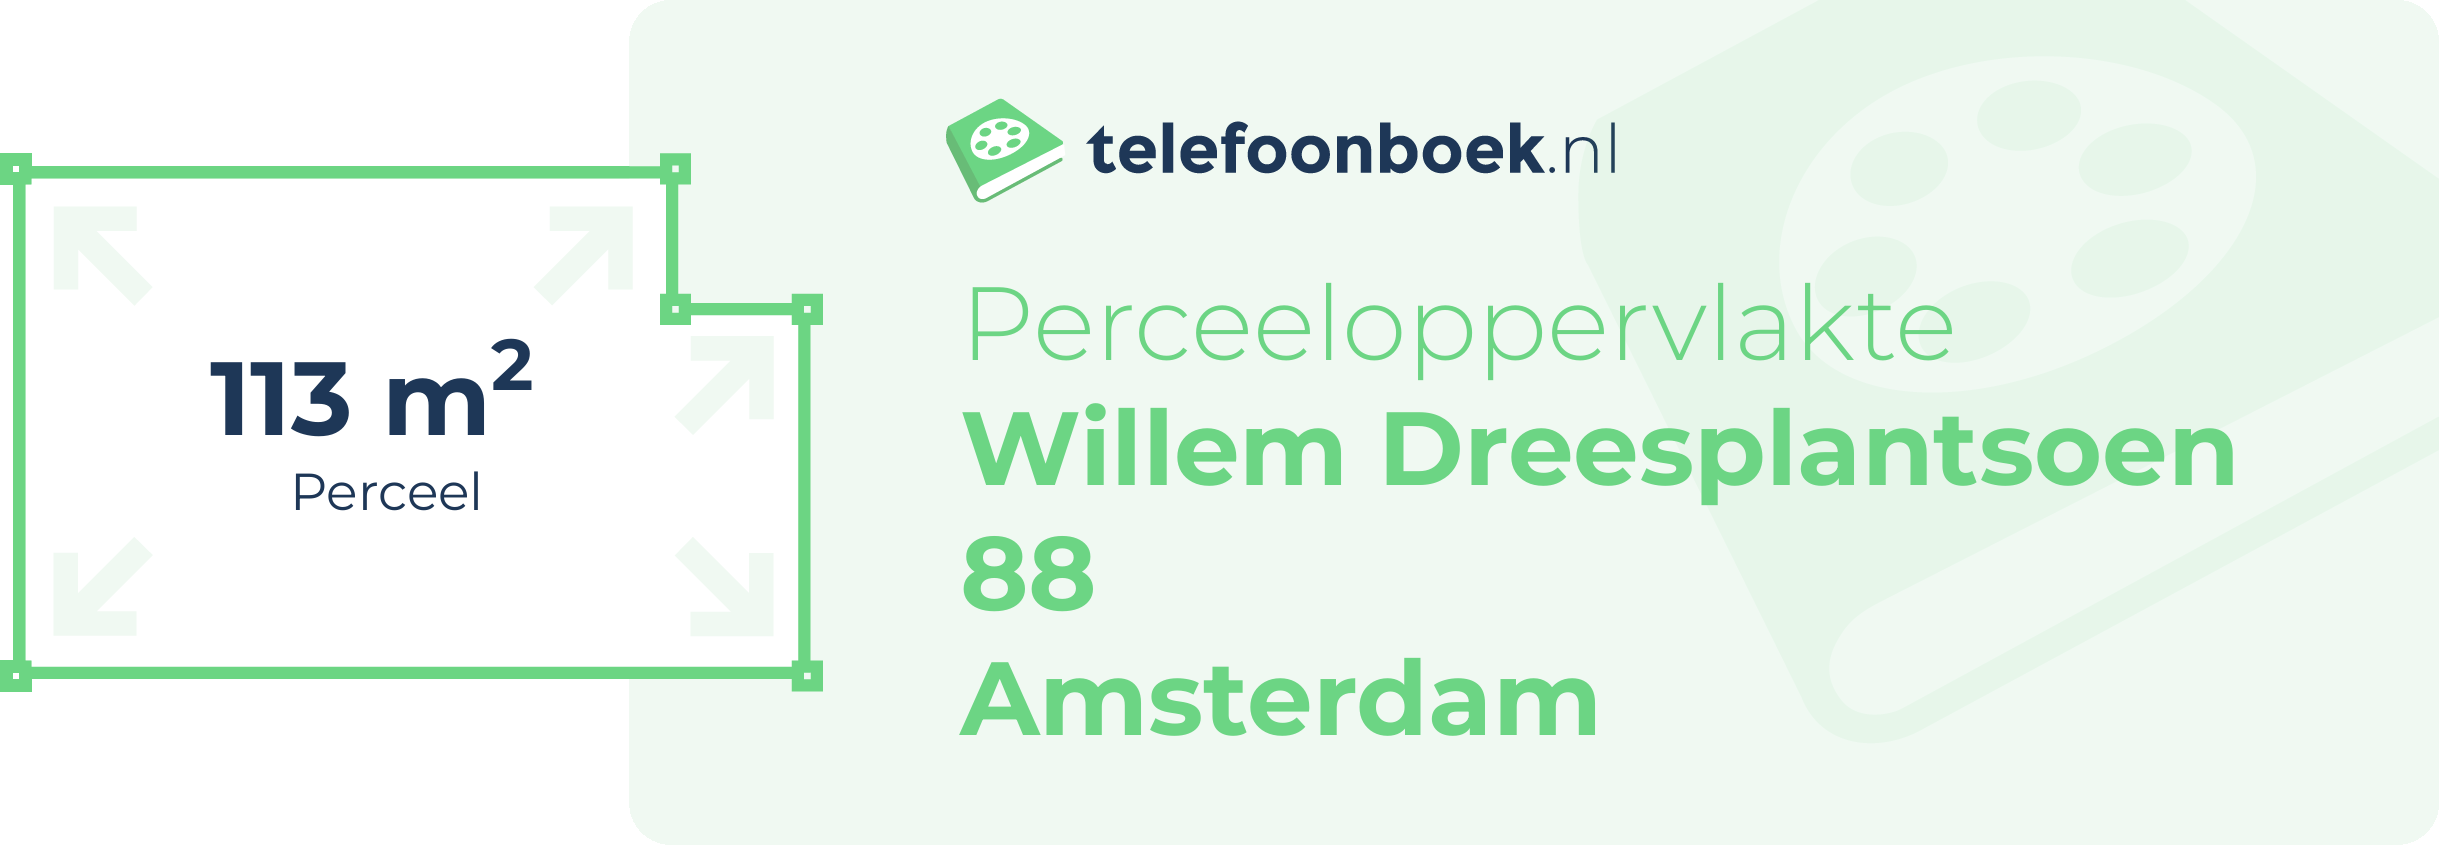 Perceeloppervlakte Willem Dreesplantsoen 88 Amsterdam